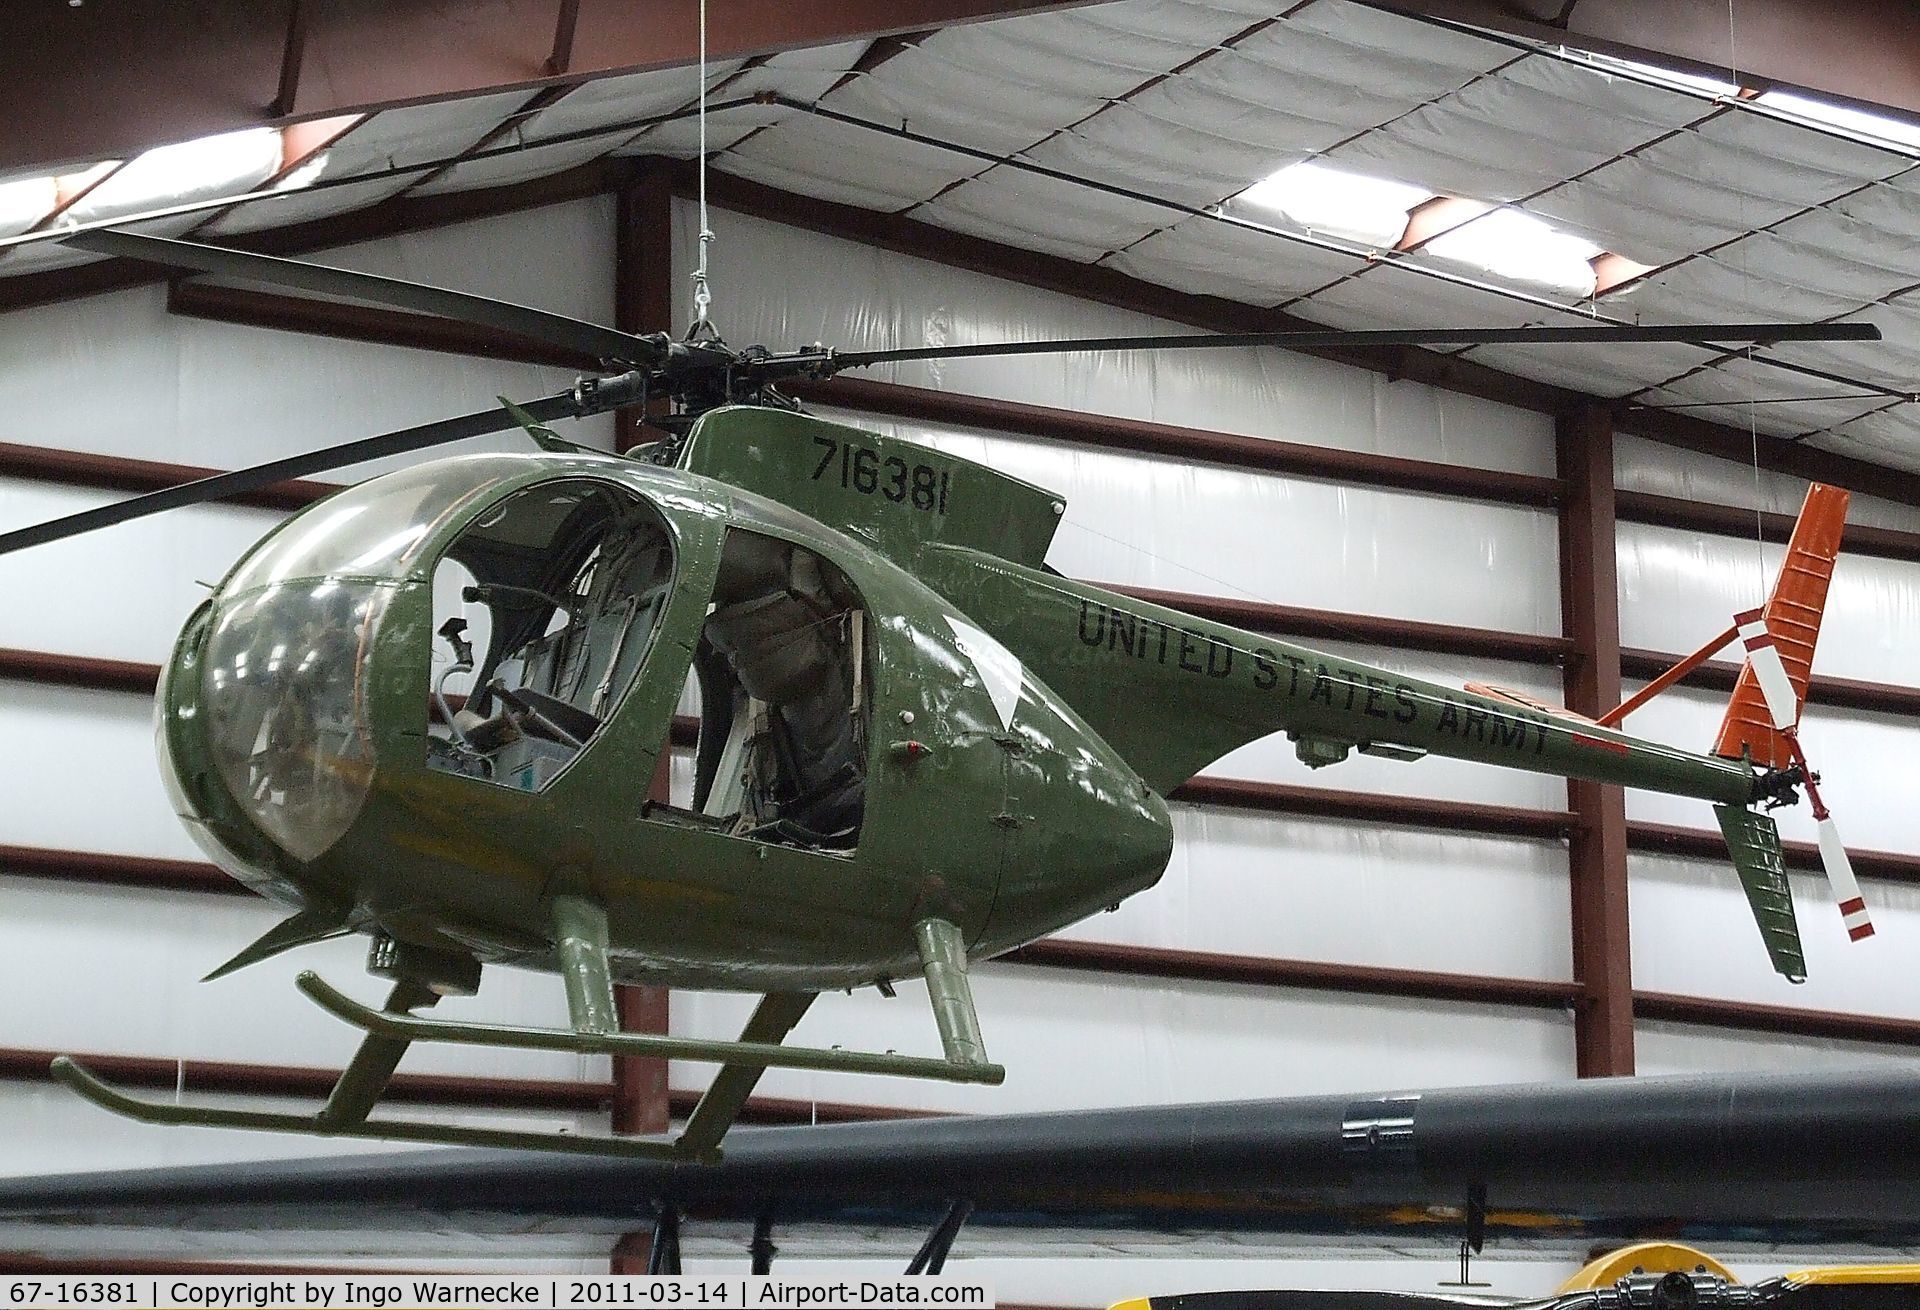 67-16381, 1967 Hughes OH-6A Cayuse C/N 0766, Hughes OH-6A Cayuse at the Pima Air & Space Museum, Tucson AZ